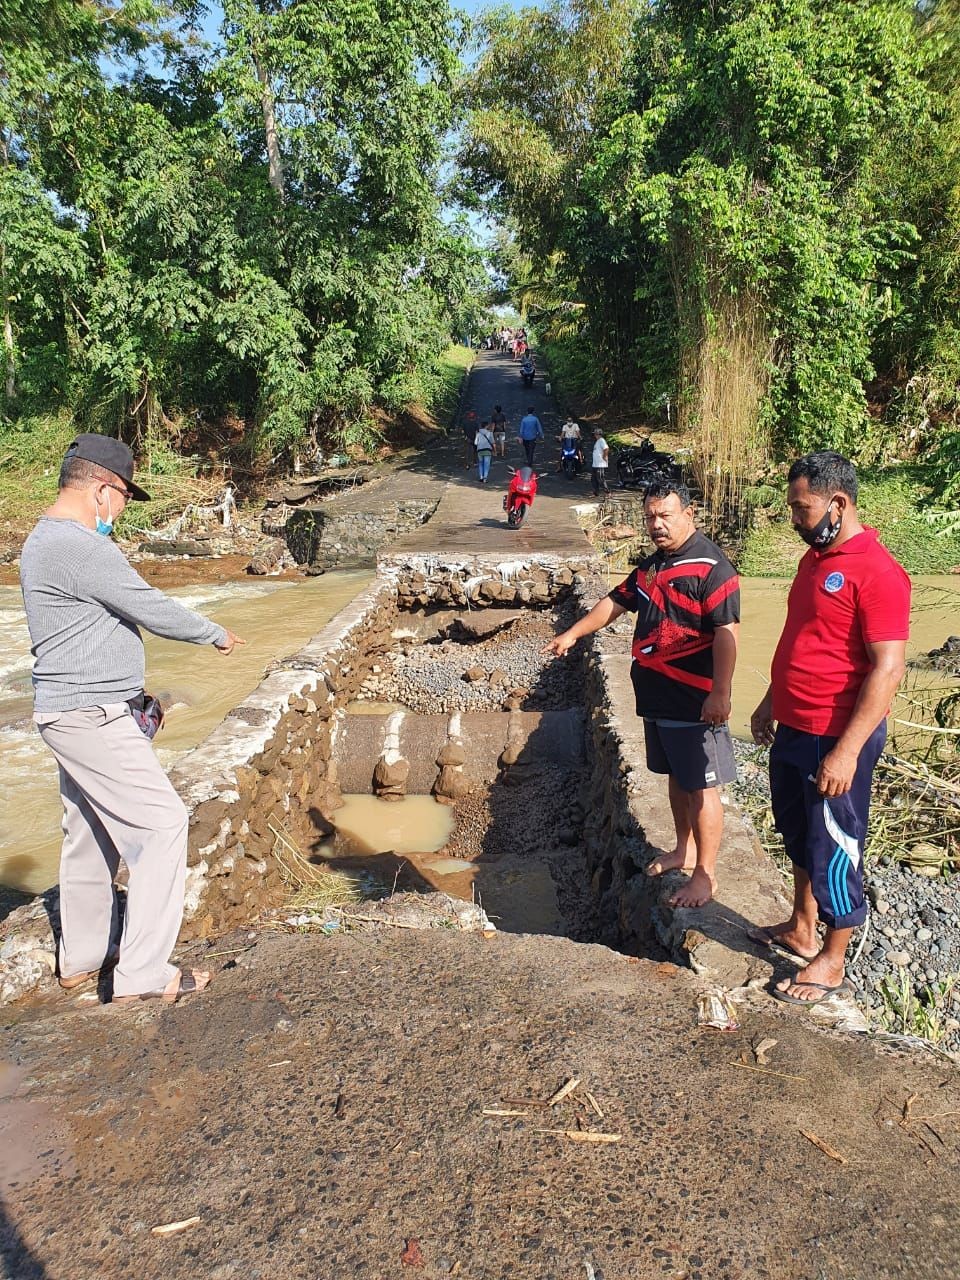 57 Wilayah di Tabanan Terkena Bencana Longsor Hingga Banjir